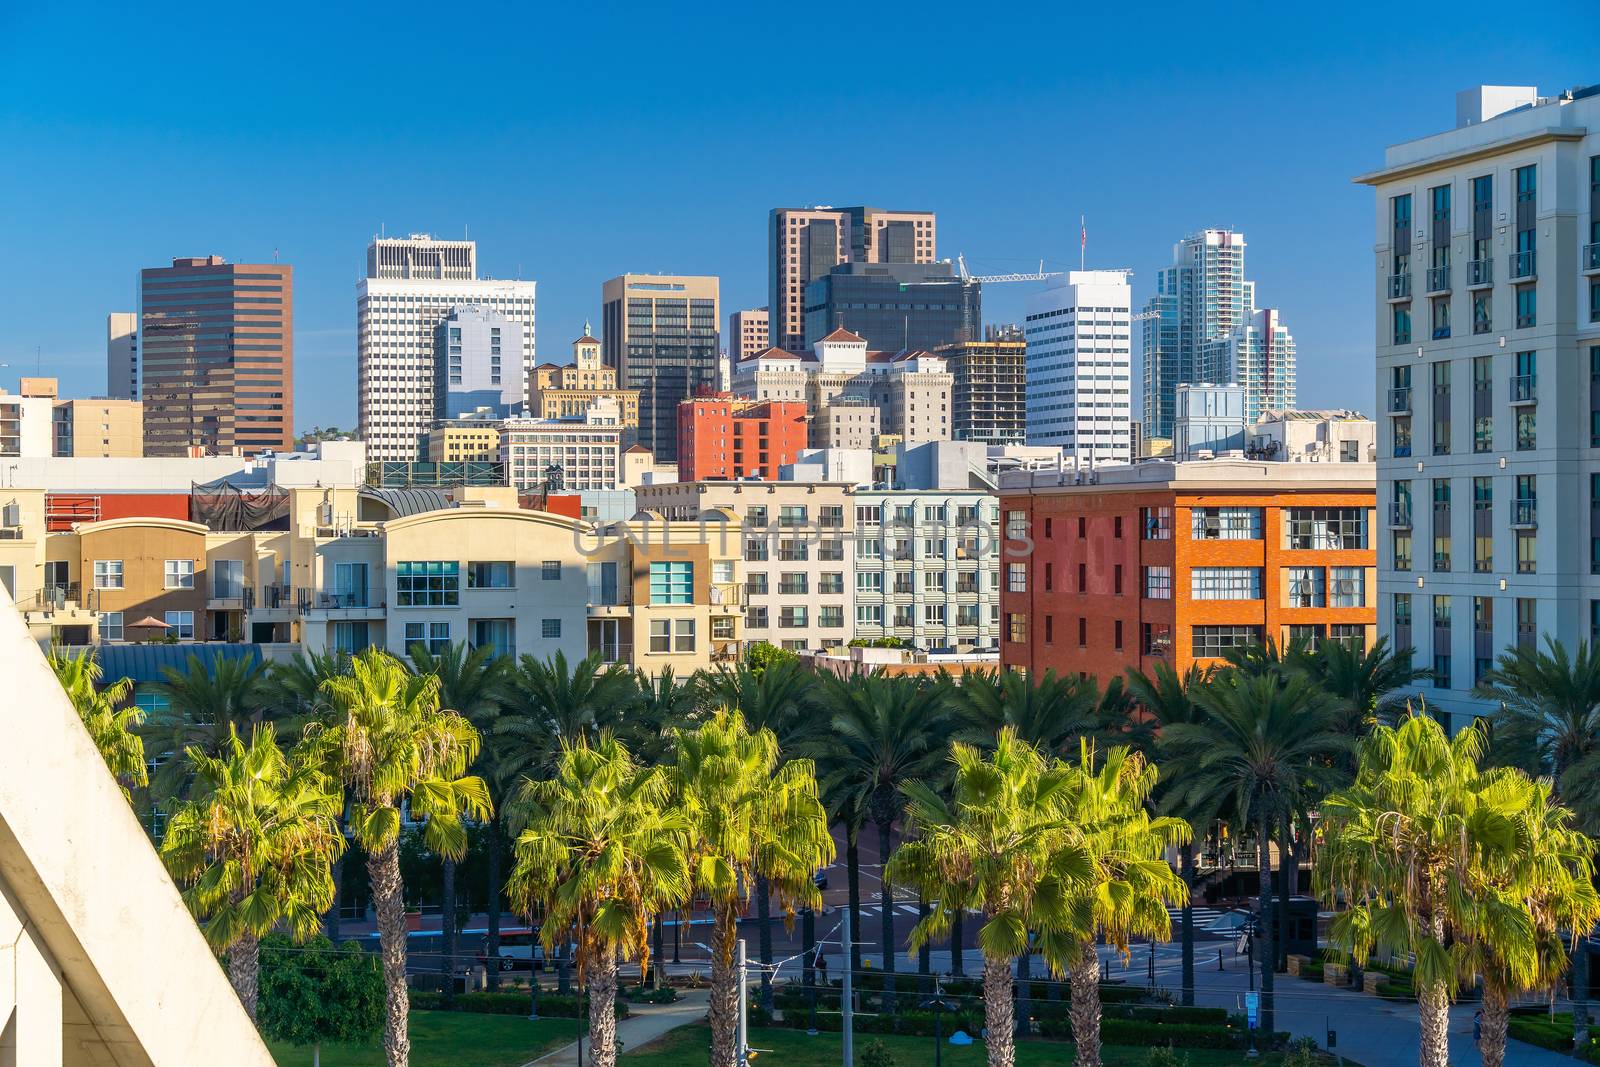 Downtown San Diego skyline in California by f11photo